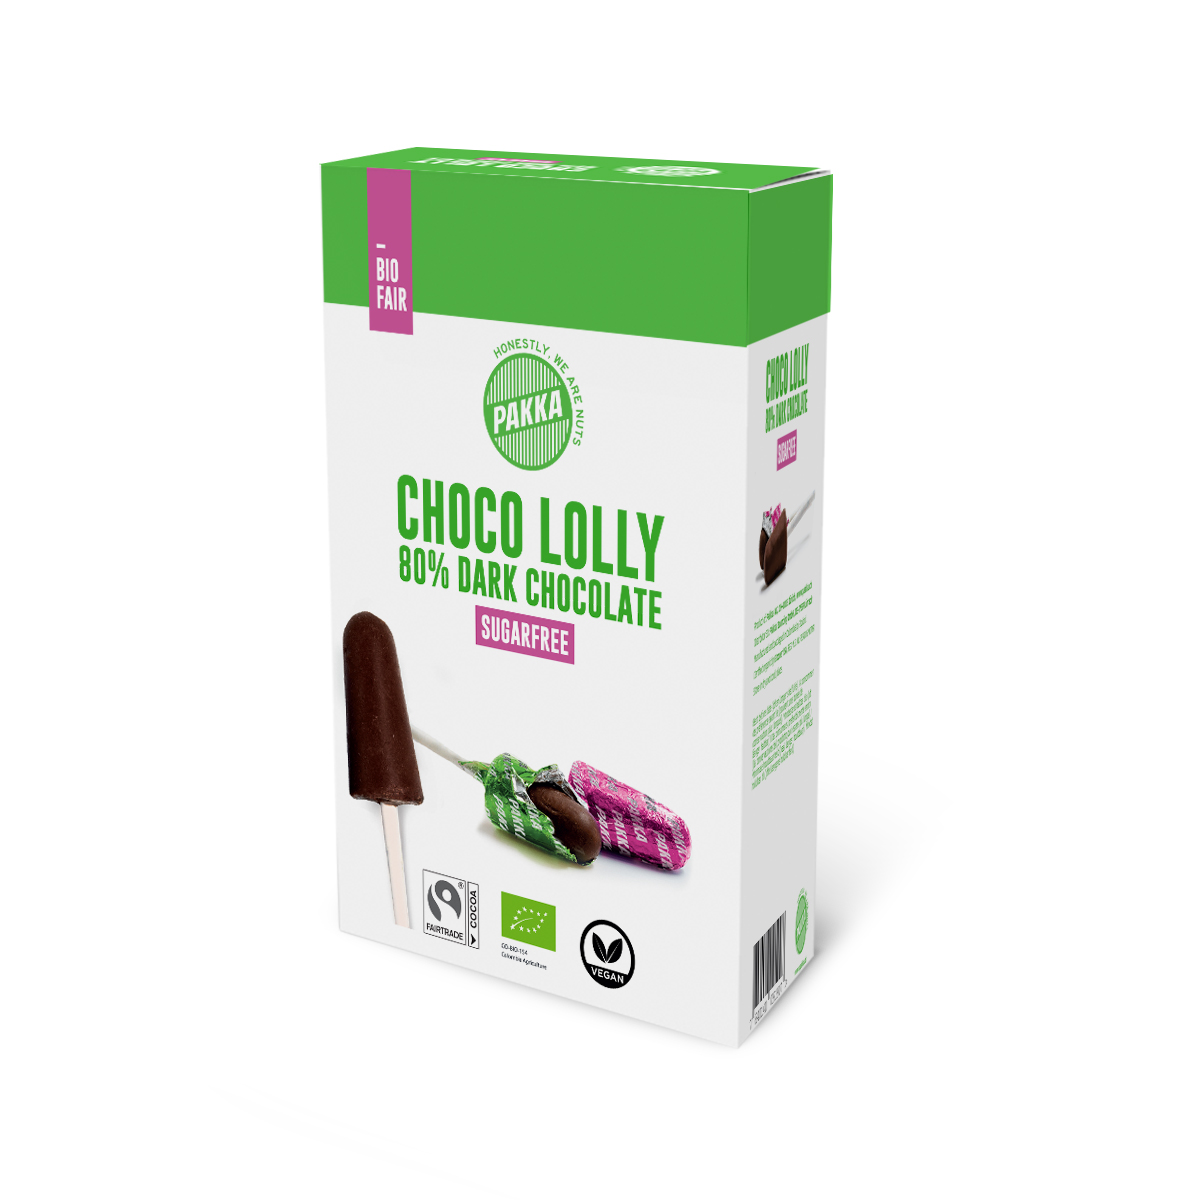 Choco Lolly 80 Prozent Dark Chocolate